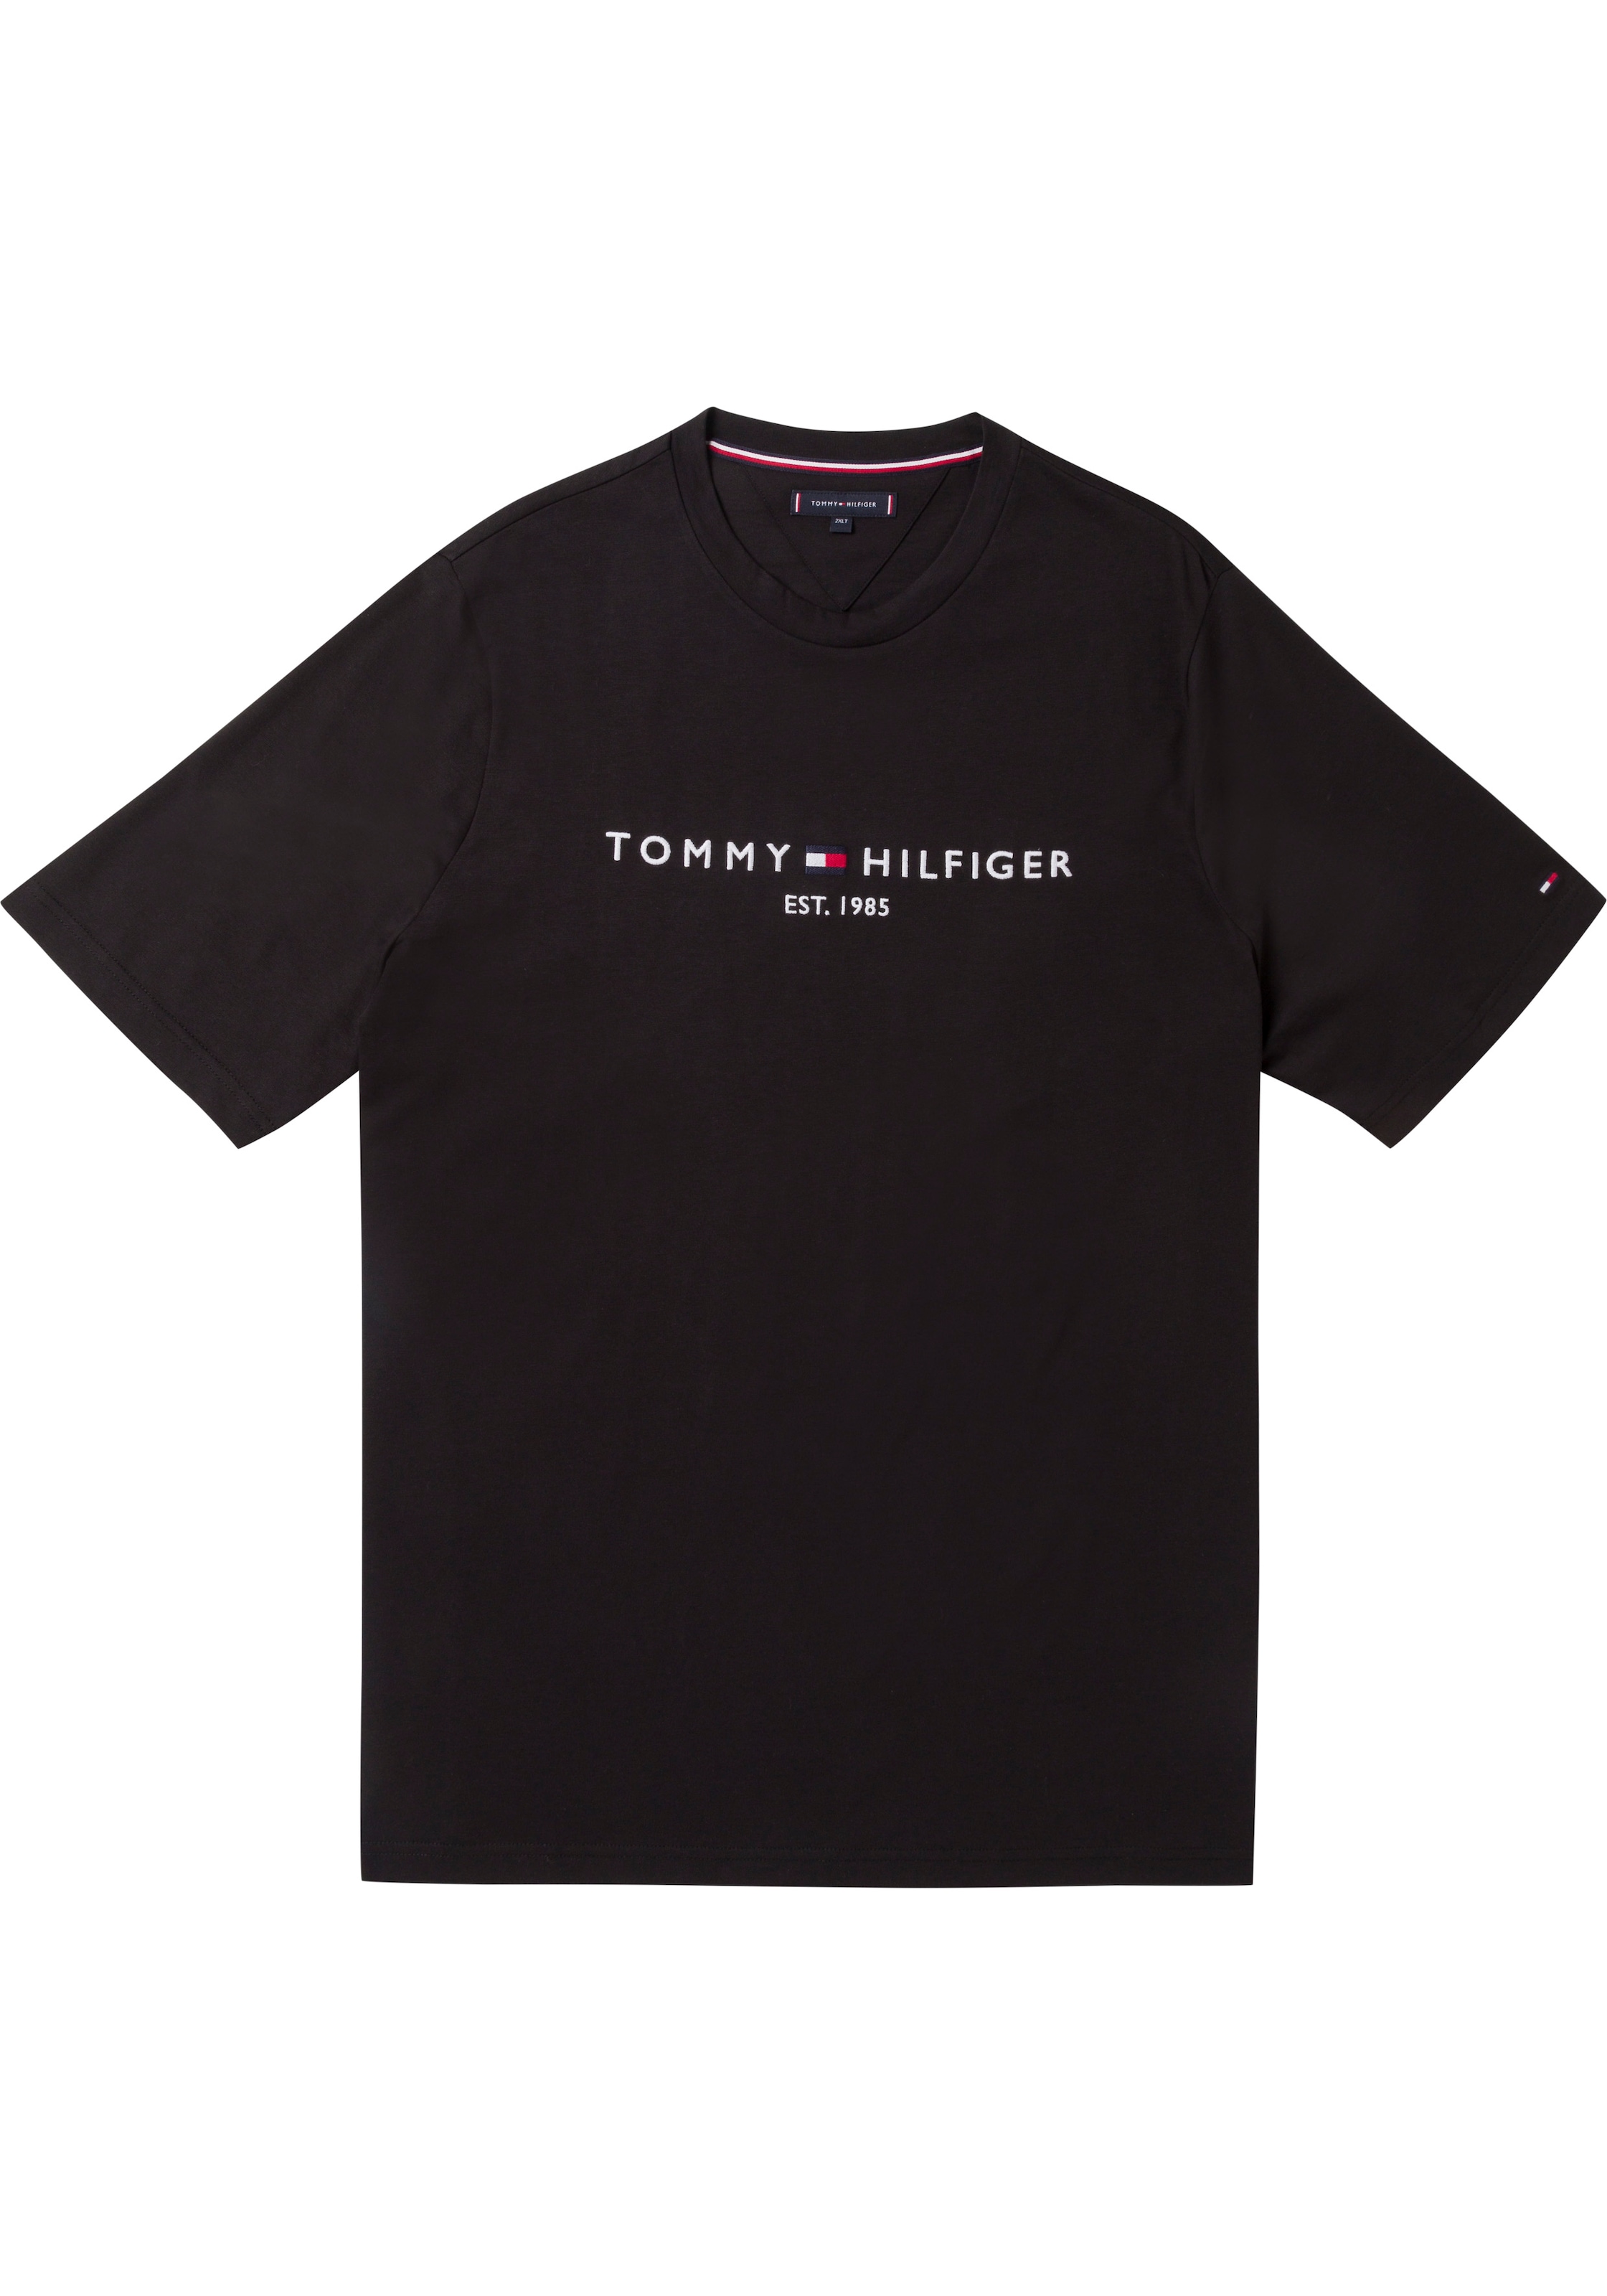 Tommy Hilfiger Big & Tall T-Shirt »BT-TOMMY LOGO TEE-B«, mit Tommy Hilfiger Logoschriftzug auf der Brust